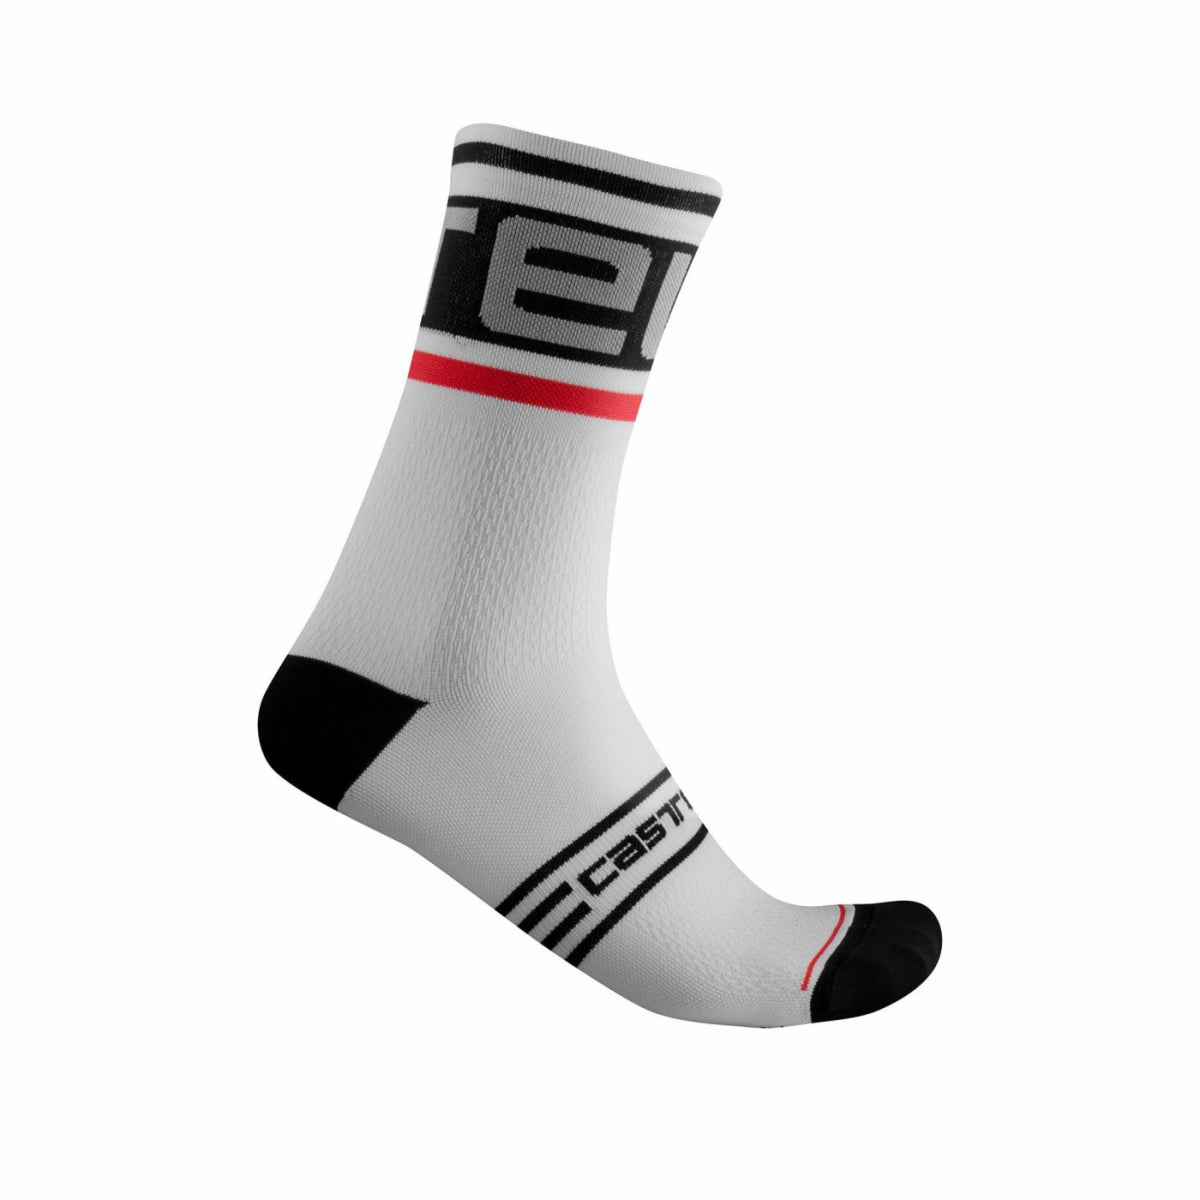 Castelli Prologo 15 Mens Cycling Socks (Black/White)